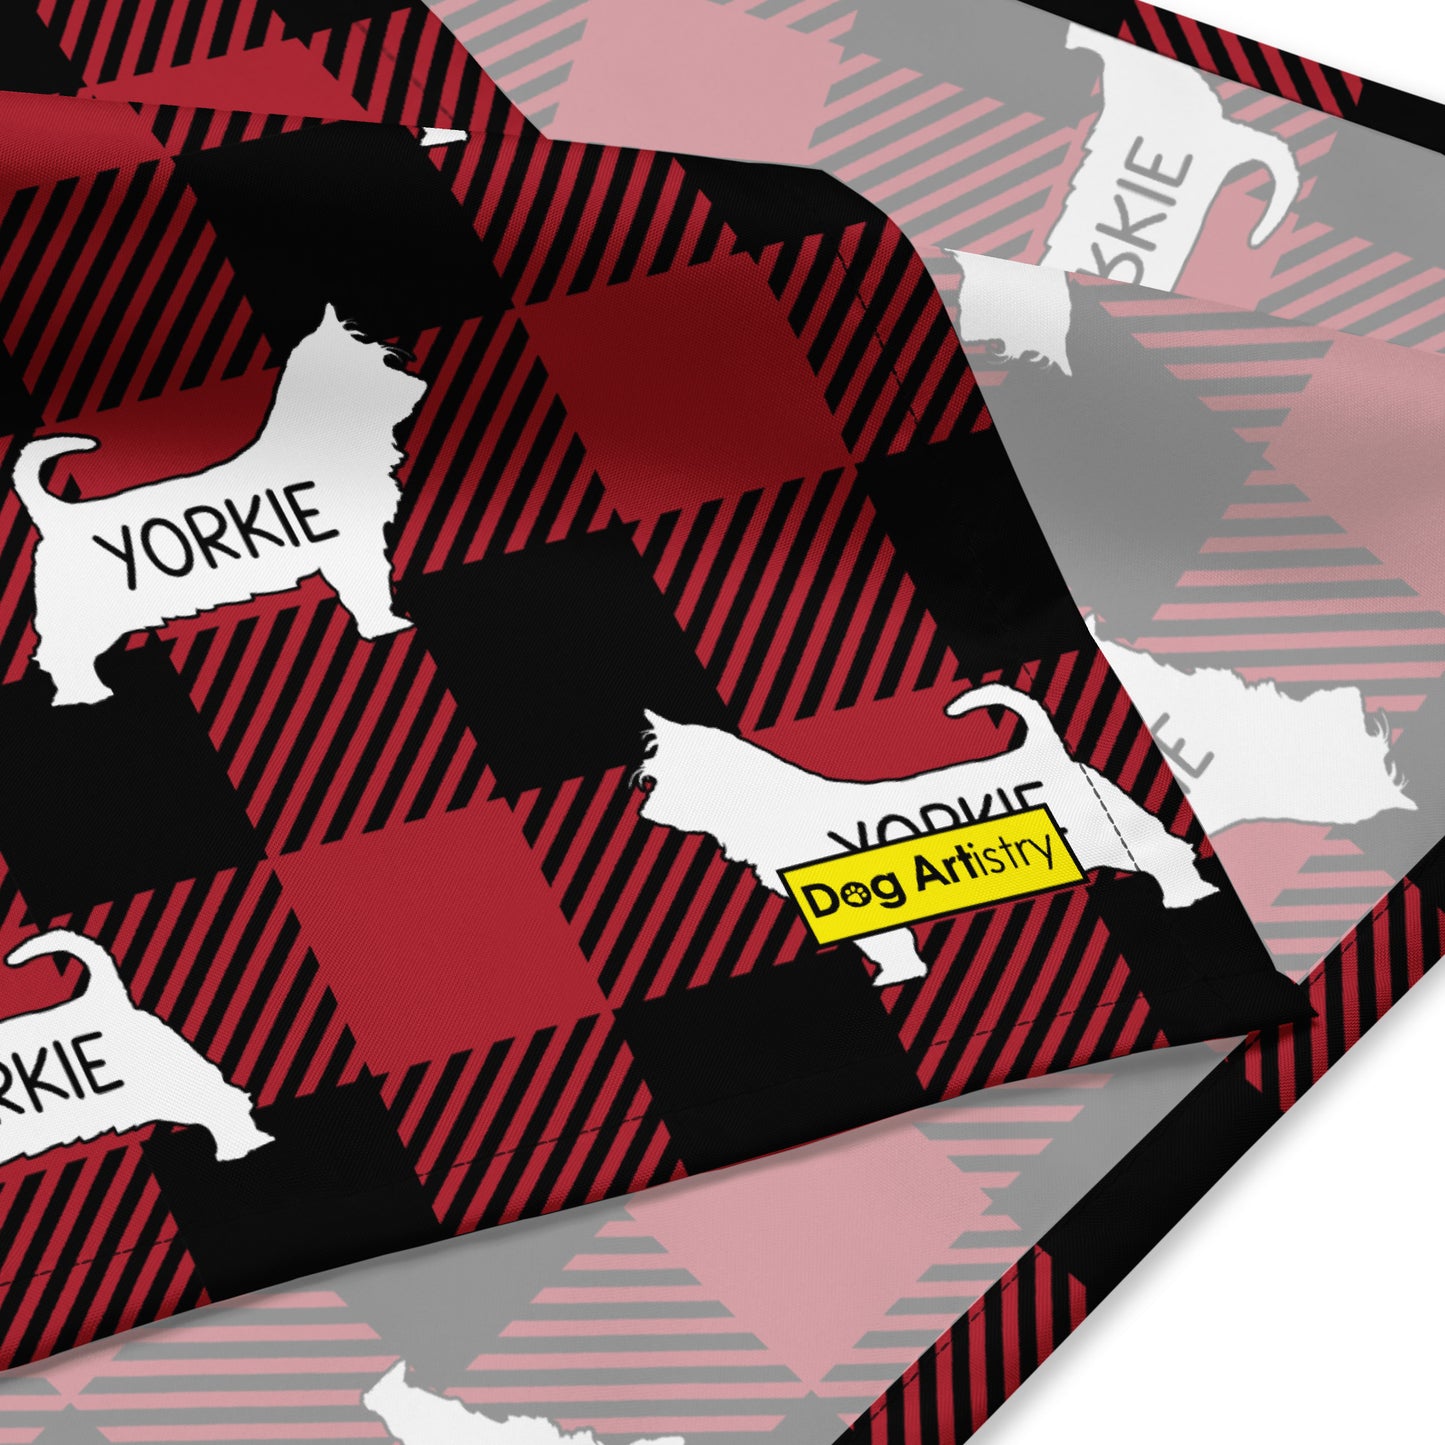 Yorkie dark red plaid bandana by Dog Artistry. Close up.